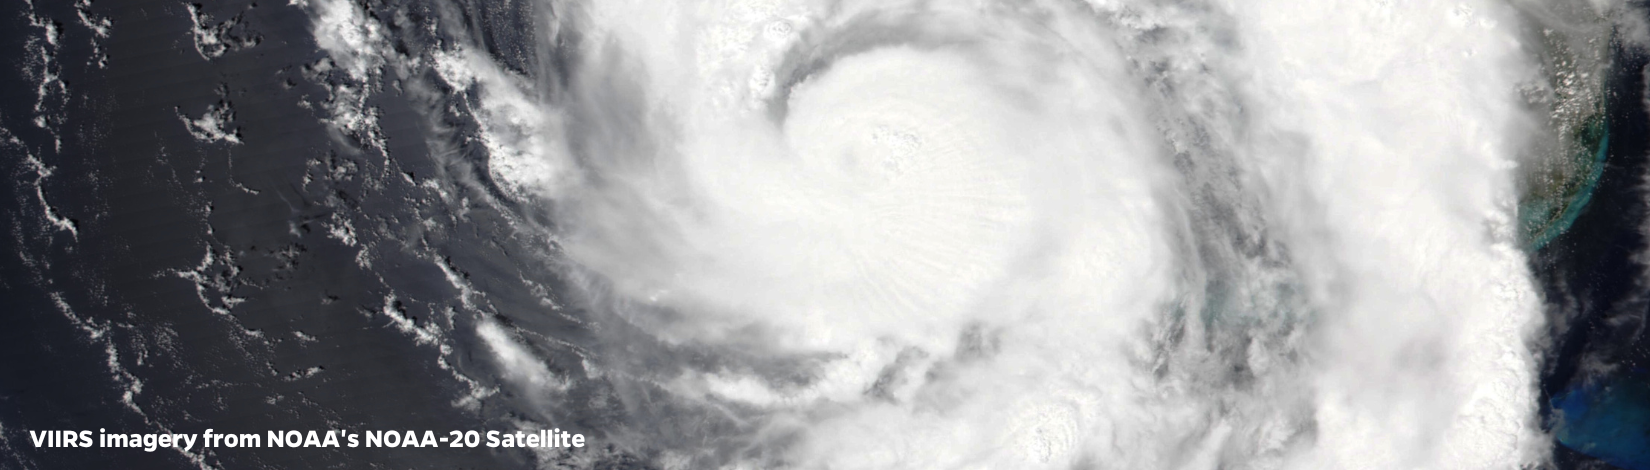 Satellite Image of Hurricane Idalia taken from VIIRS imagery from NOAA's NOAA-20 Satellite.